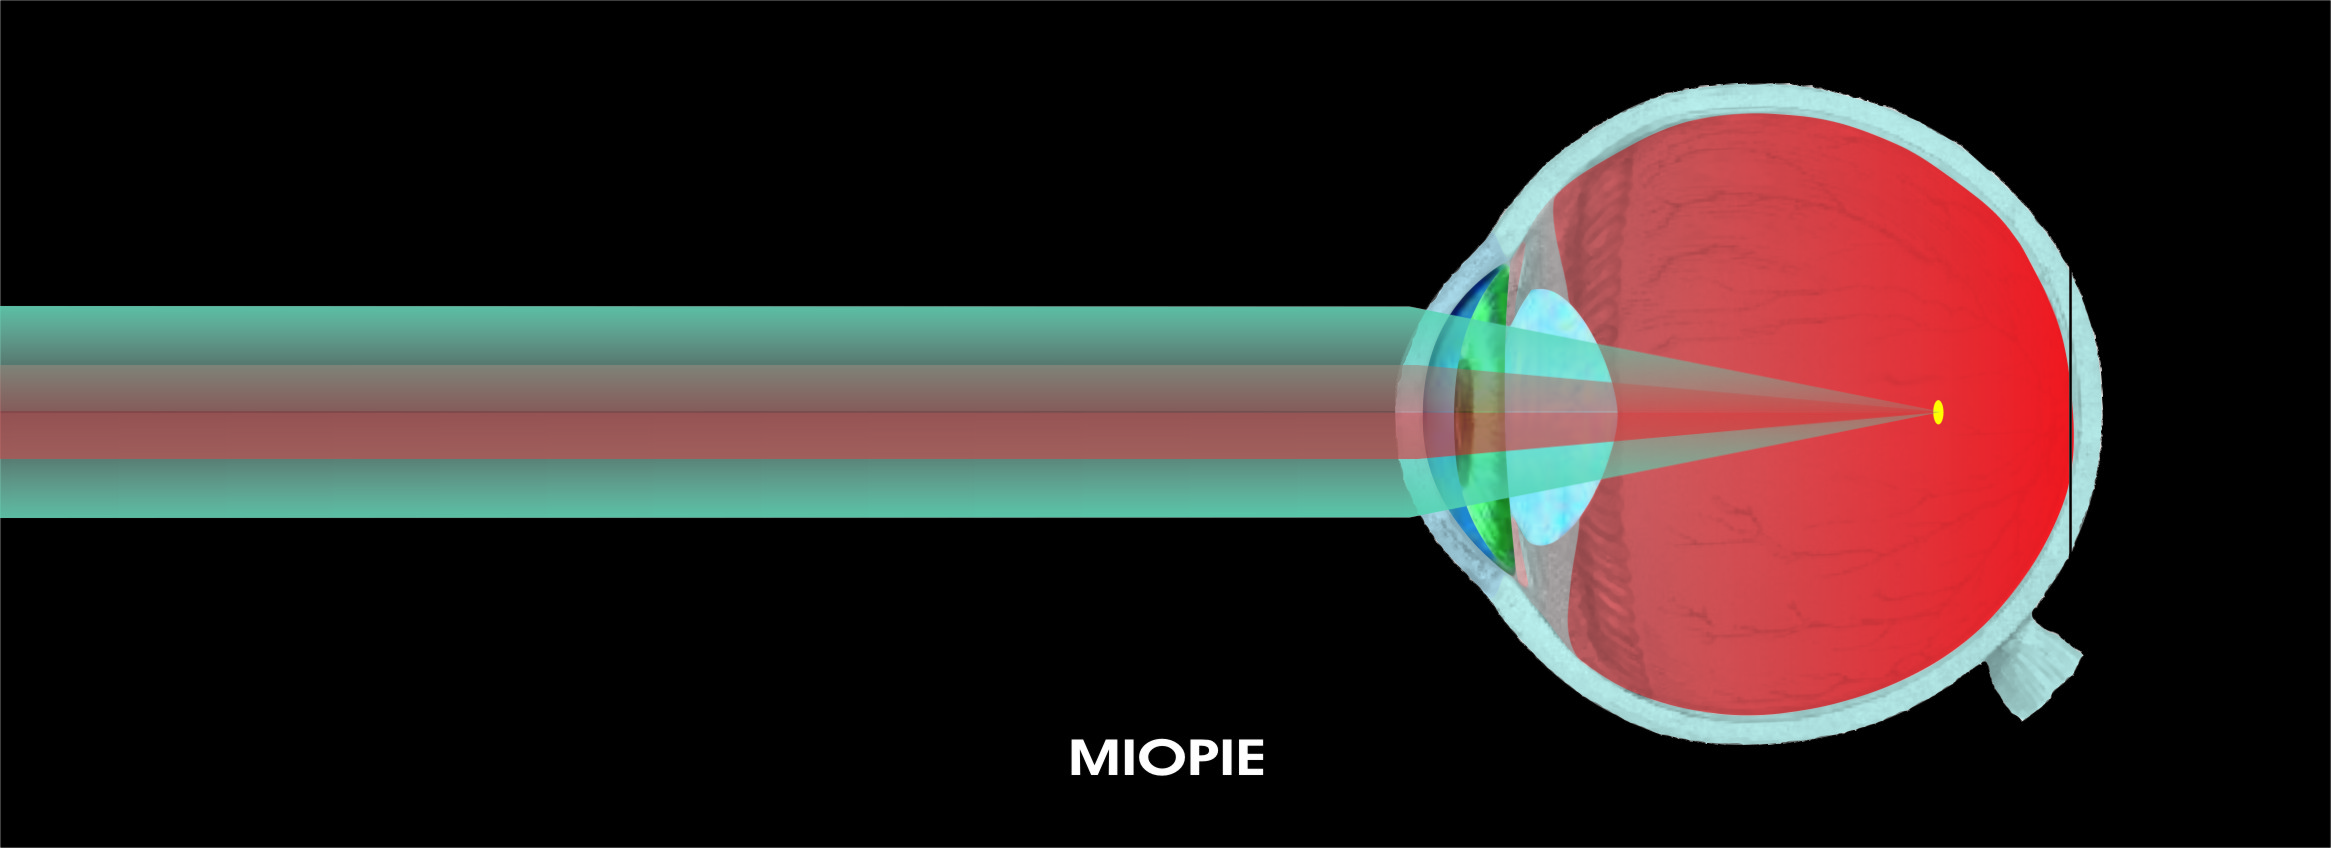 Miopie progresiva